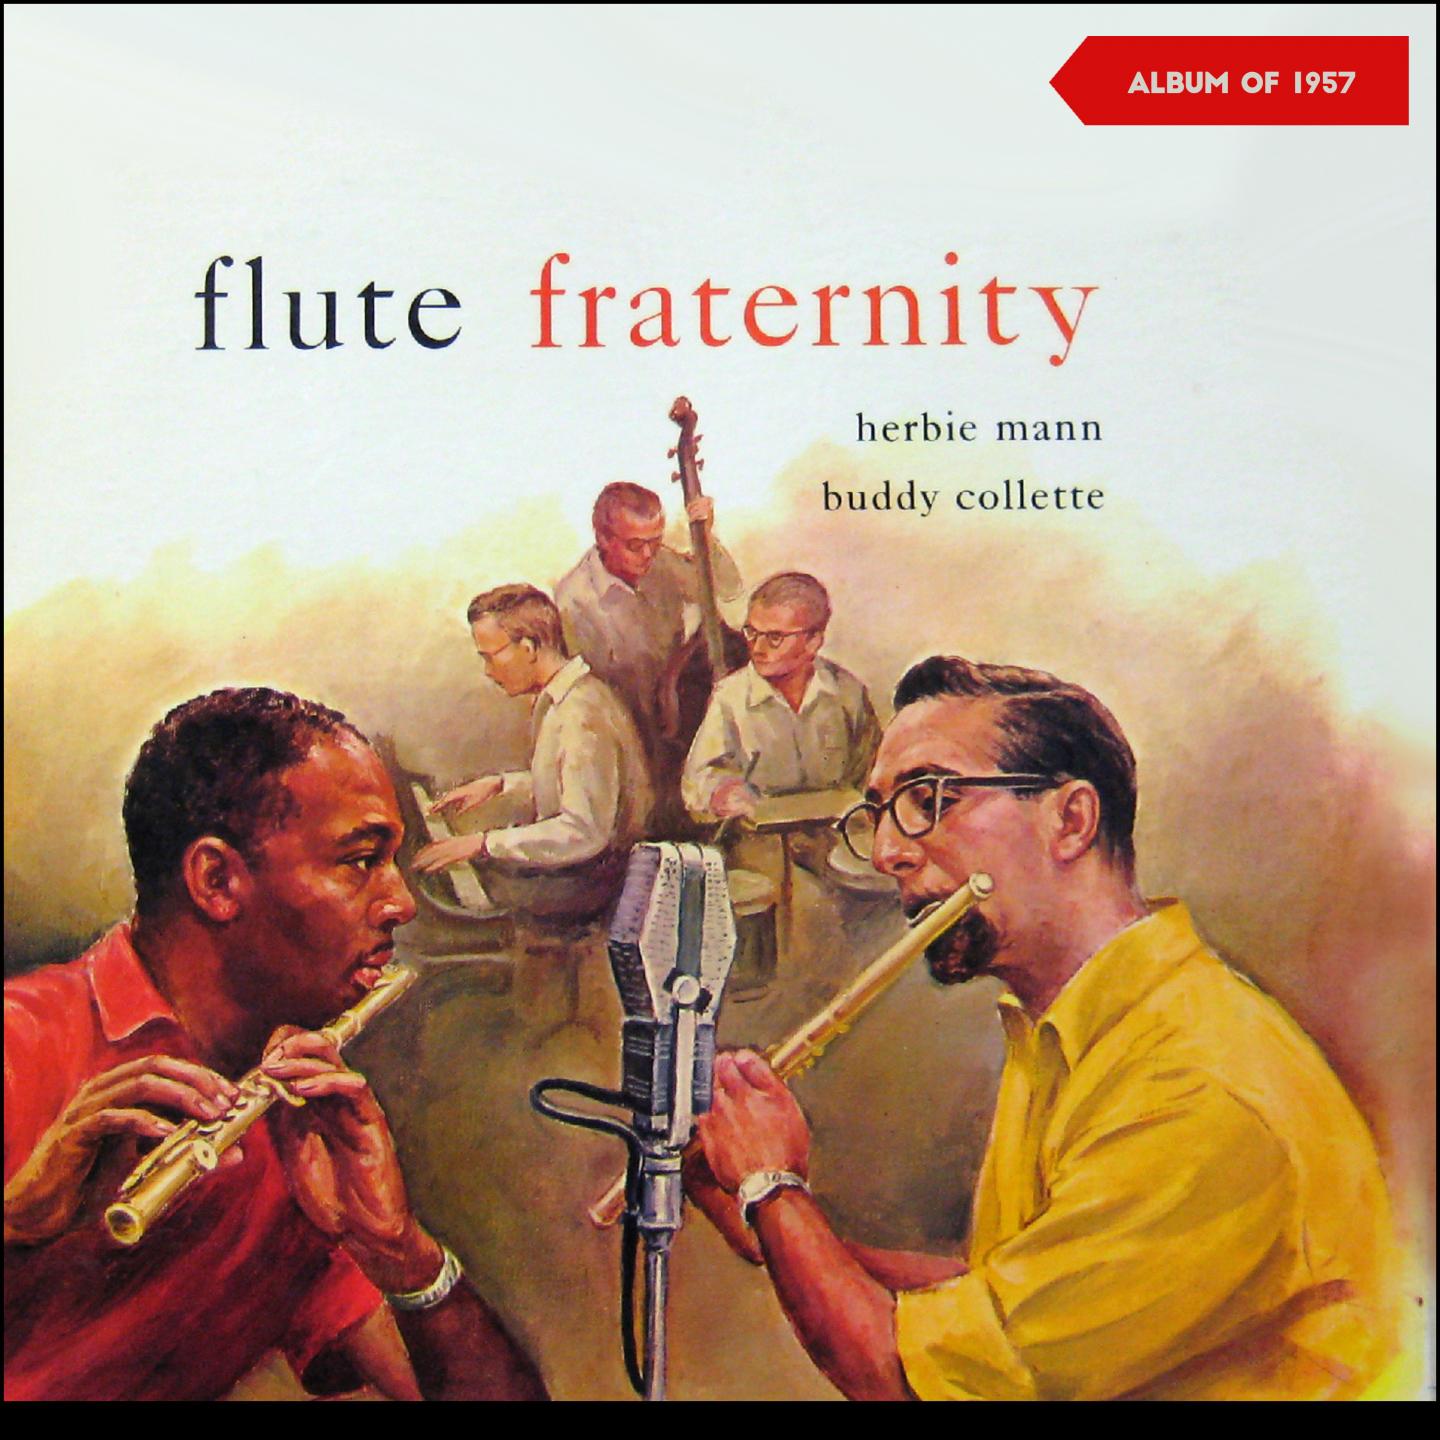 Flute Fraternity (Album of 1957)